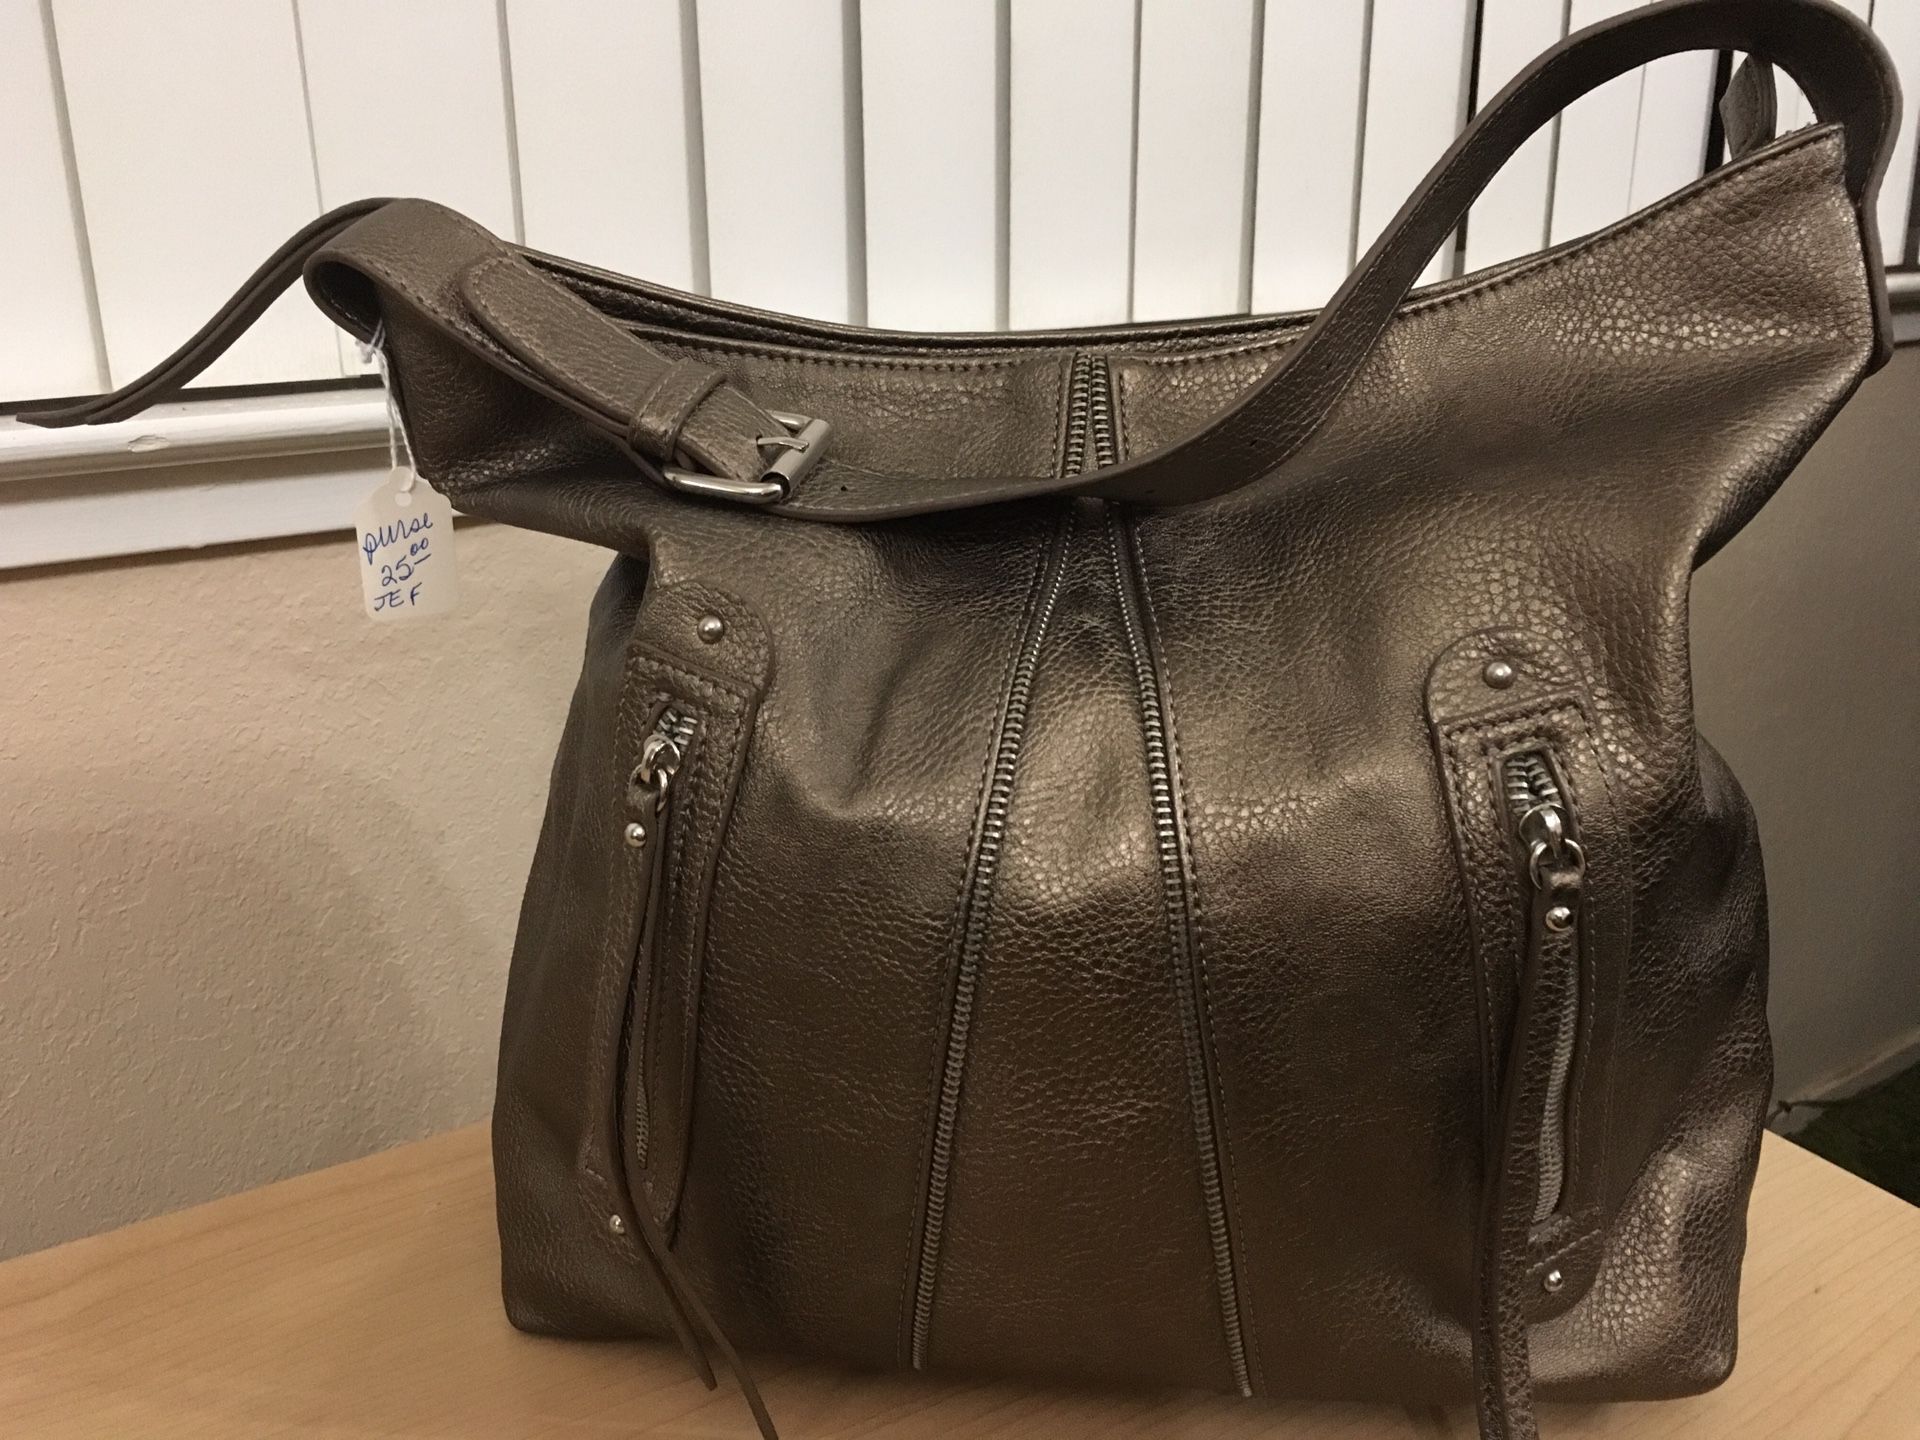 Linea Pelle large taupe leather hobo tote satchel purse bag